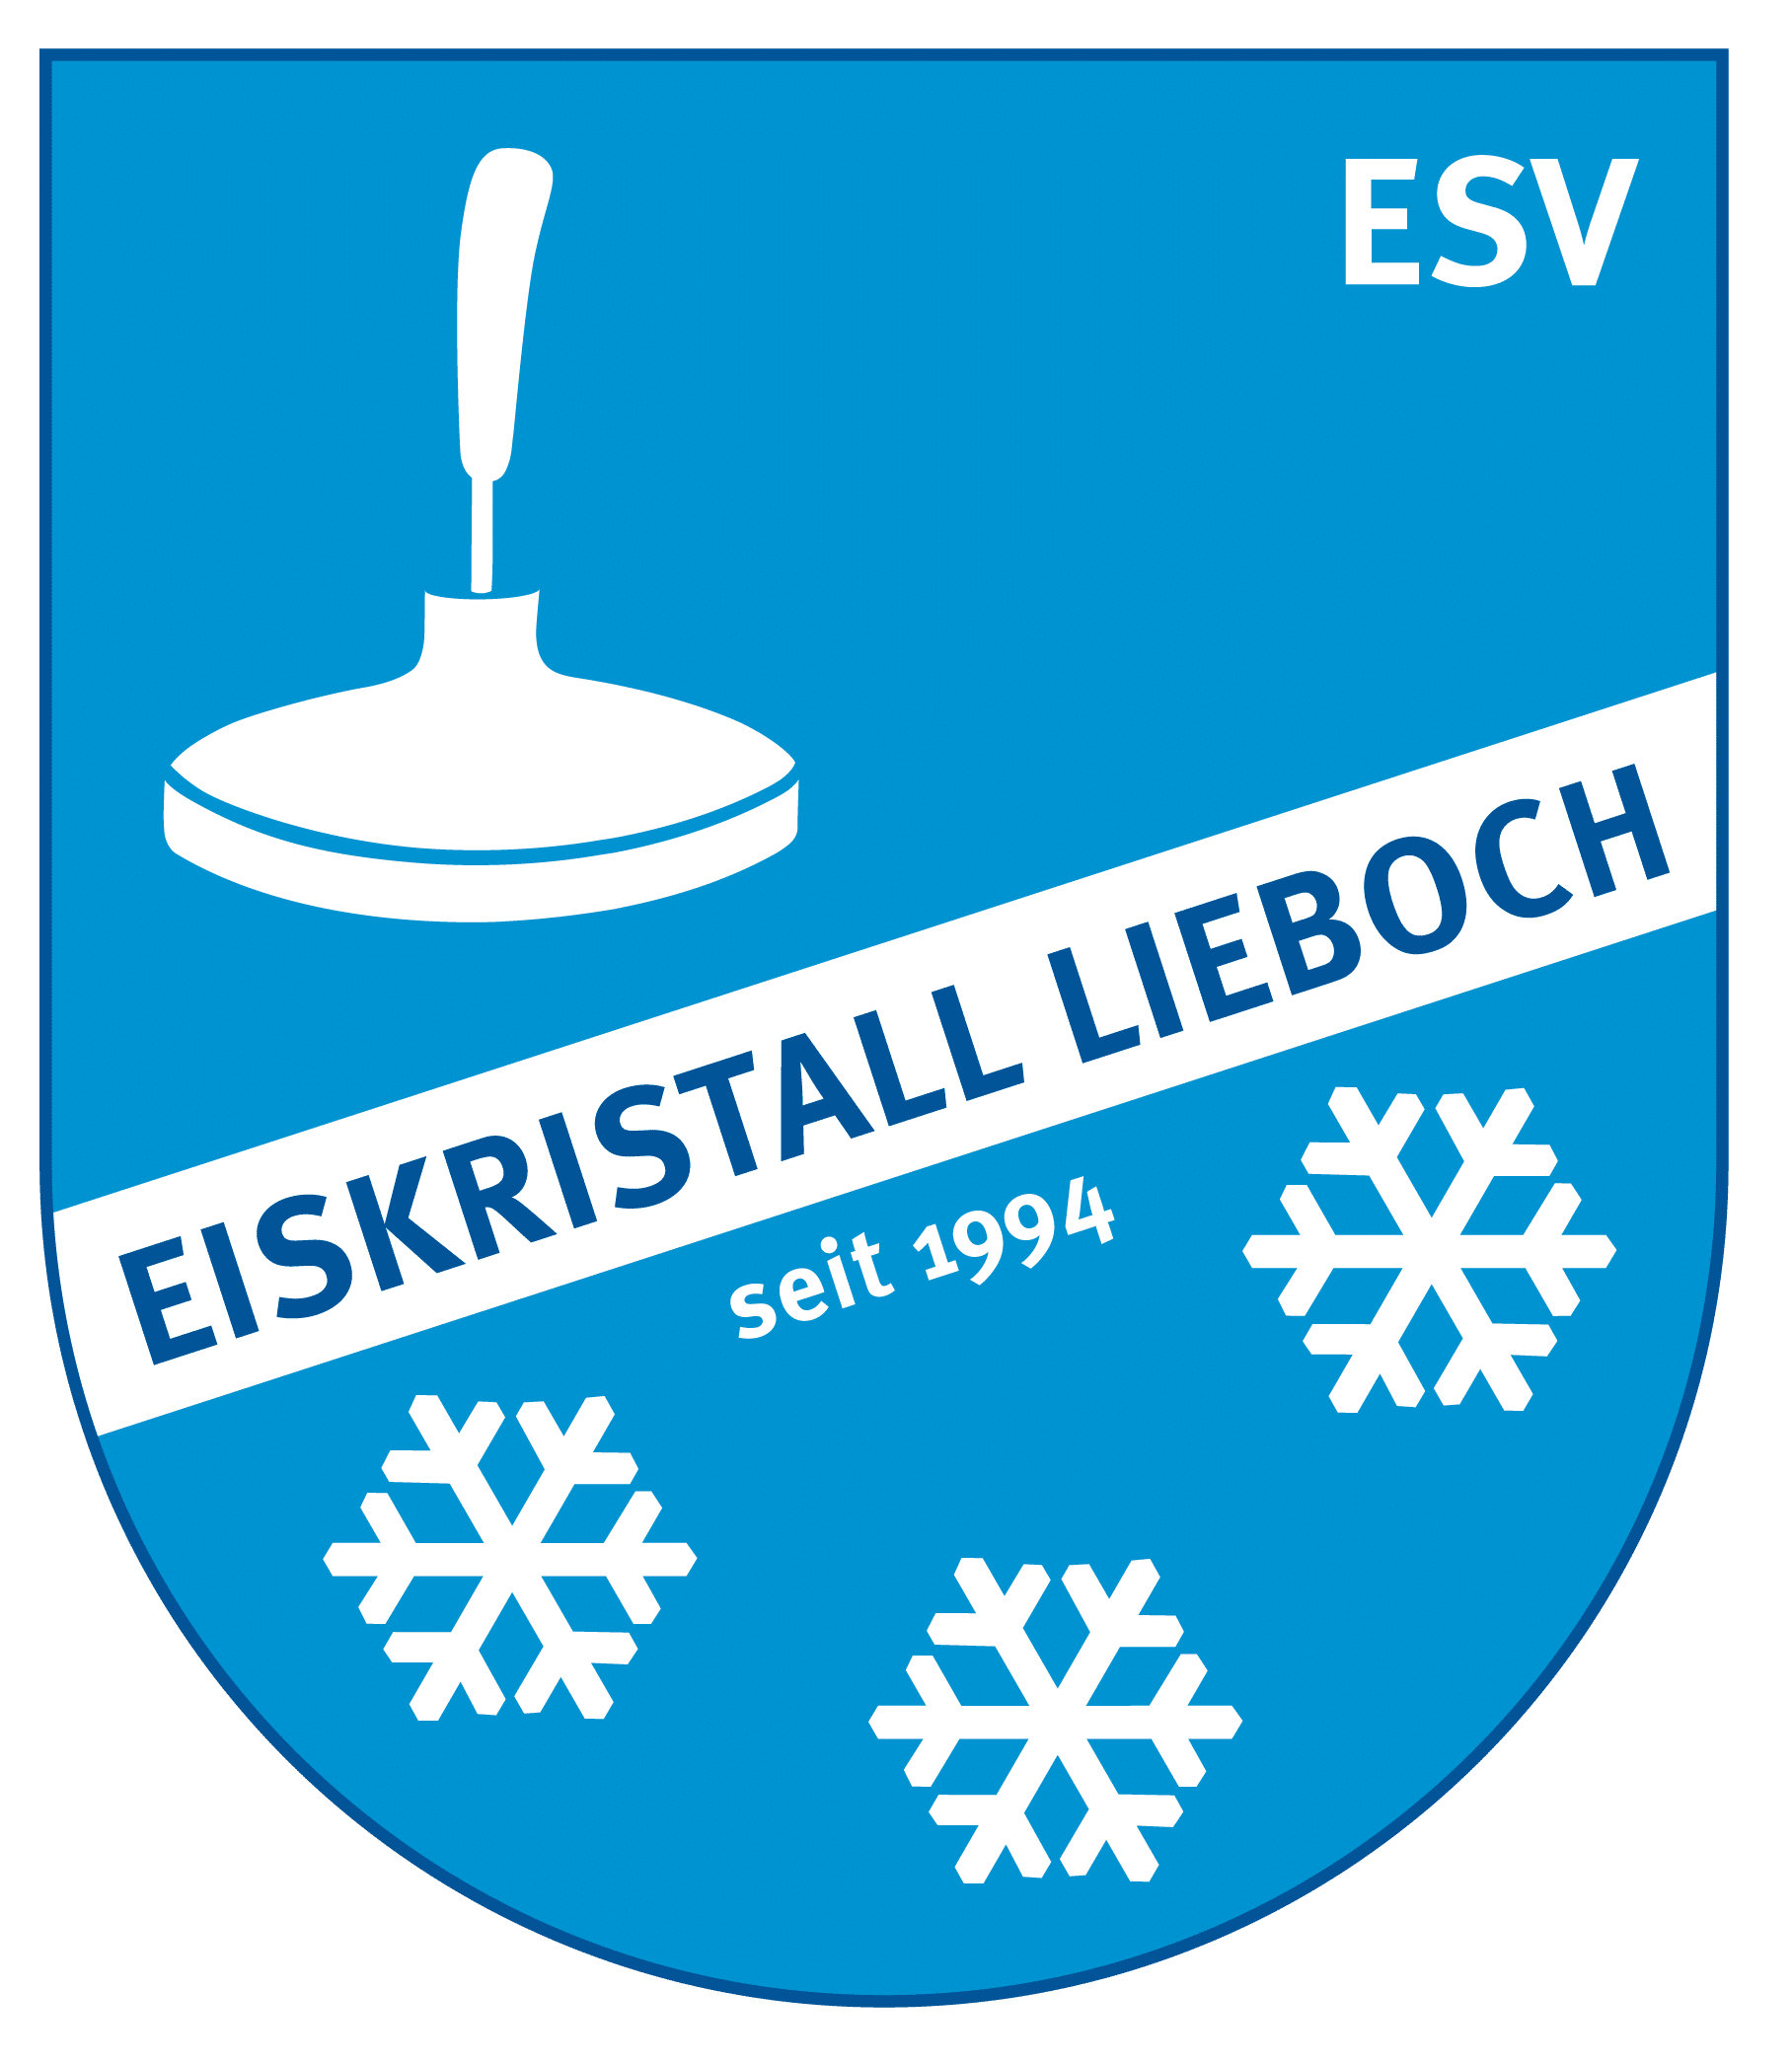 ESV Eiskristall LIEBOCH II